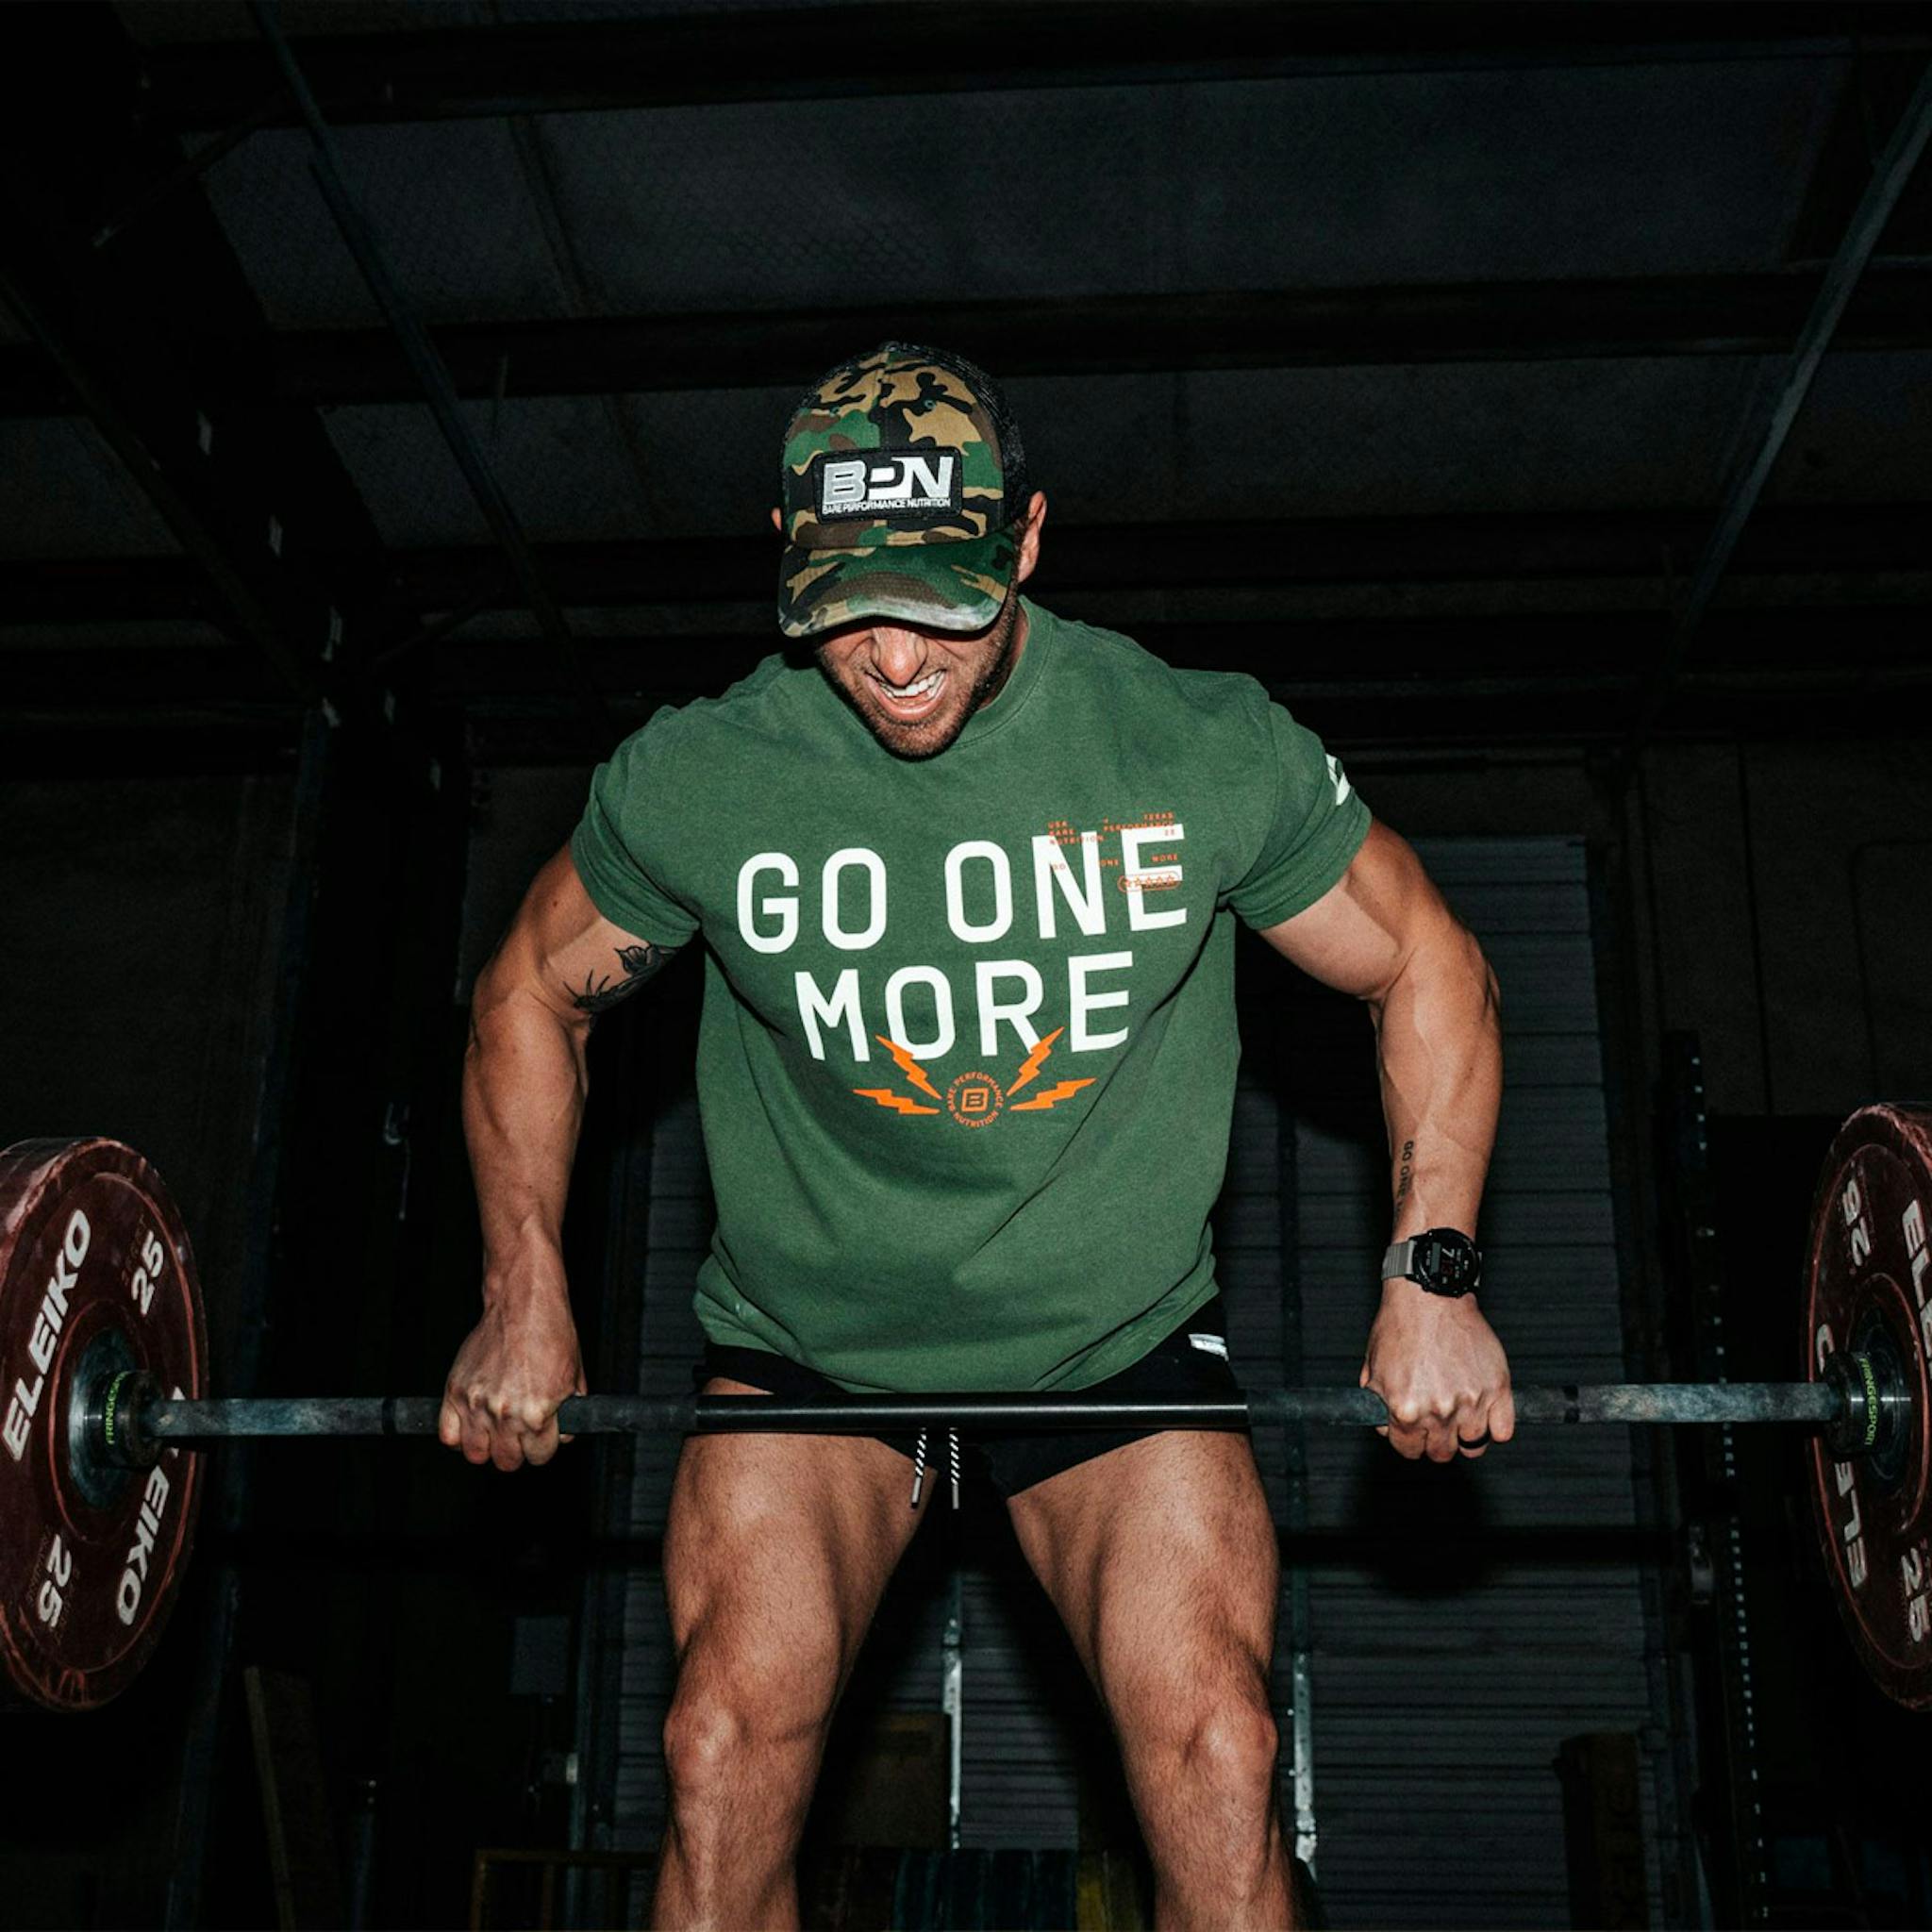 Nick Bare lifting weights